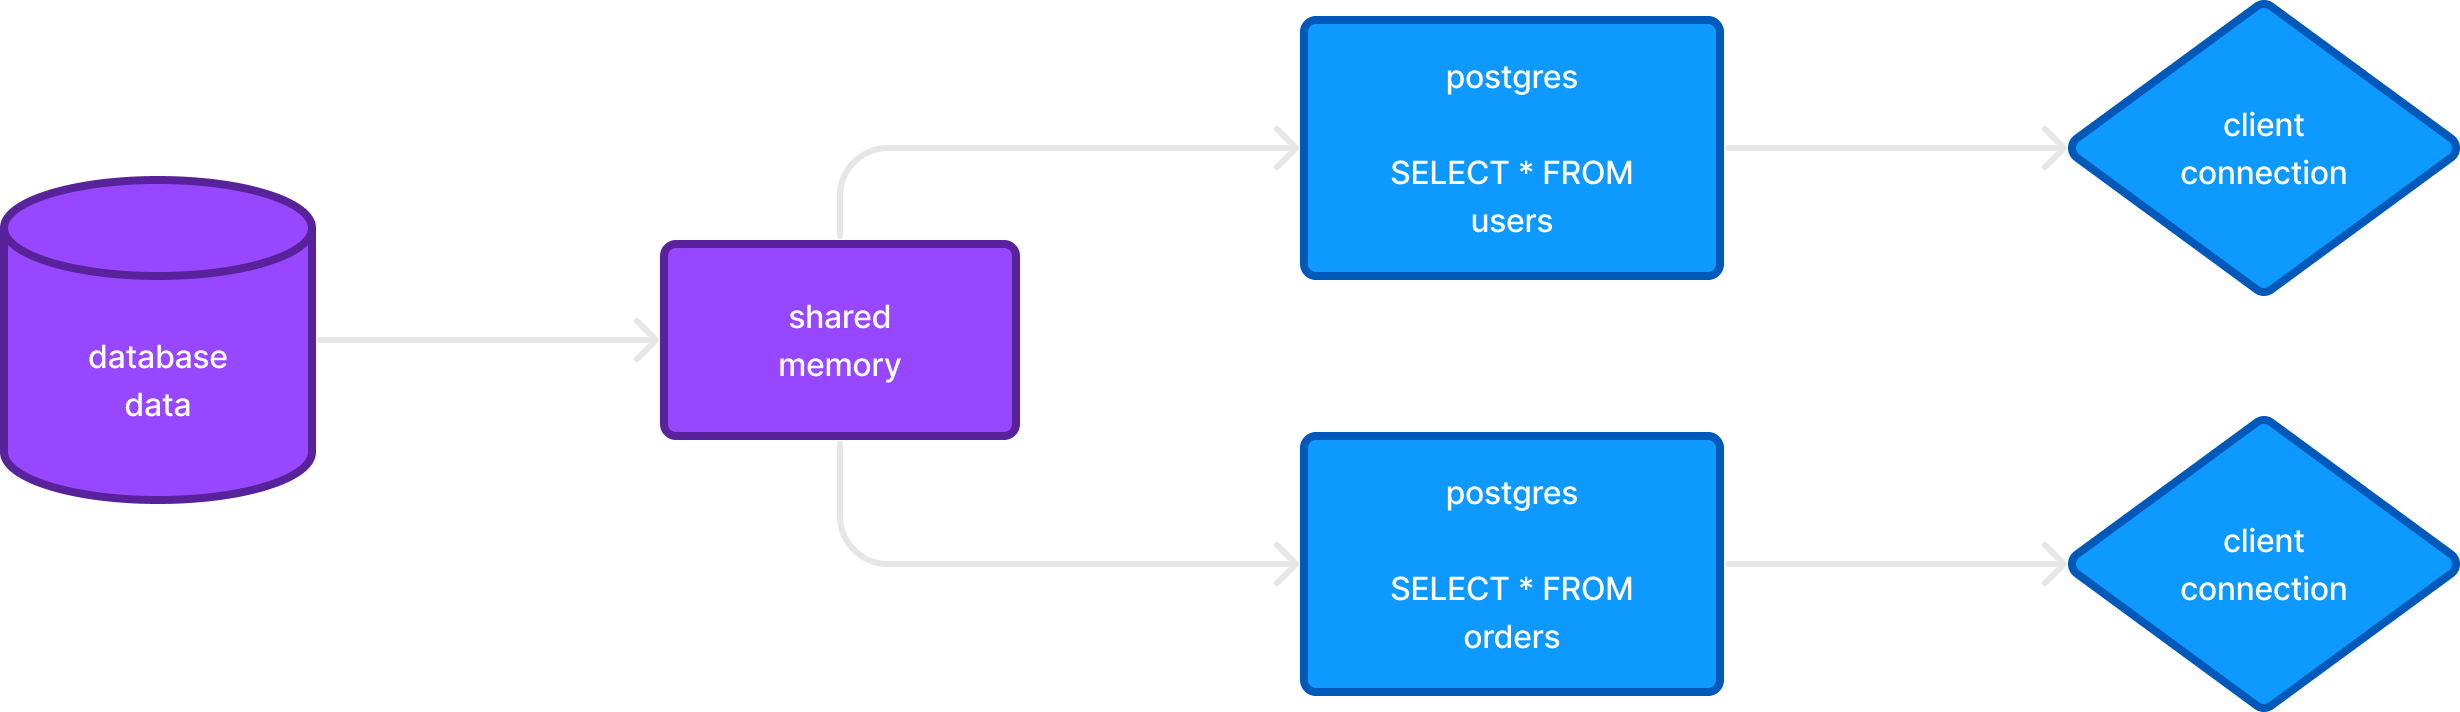 PostgreSQL architecture